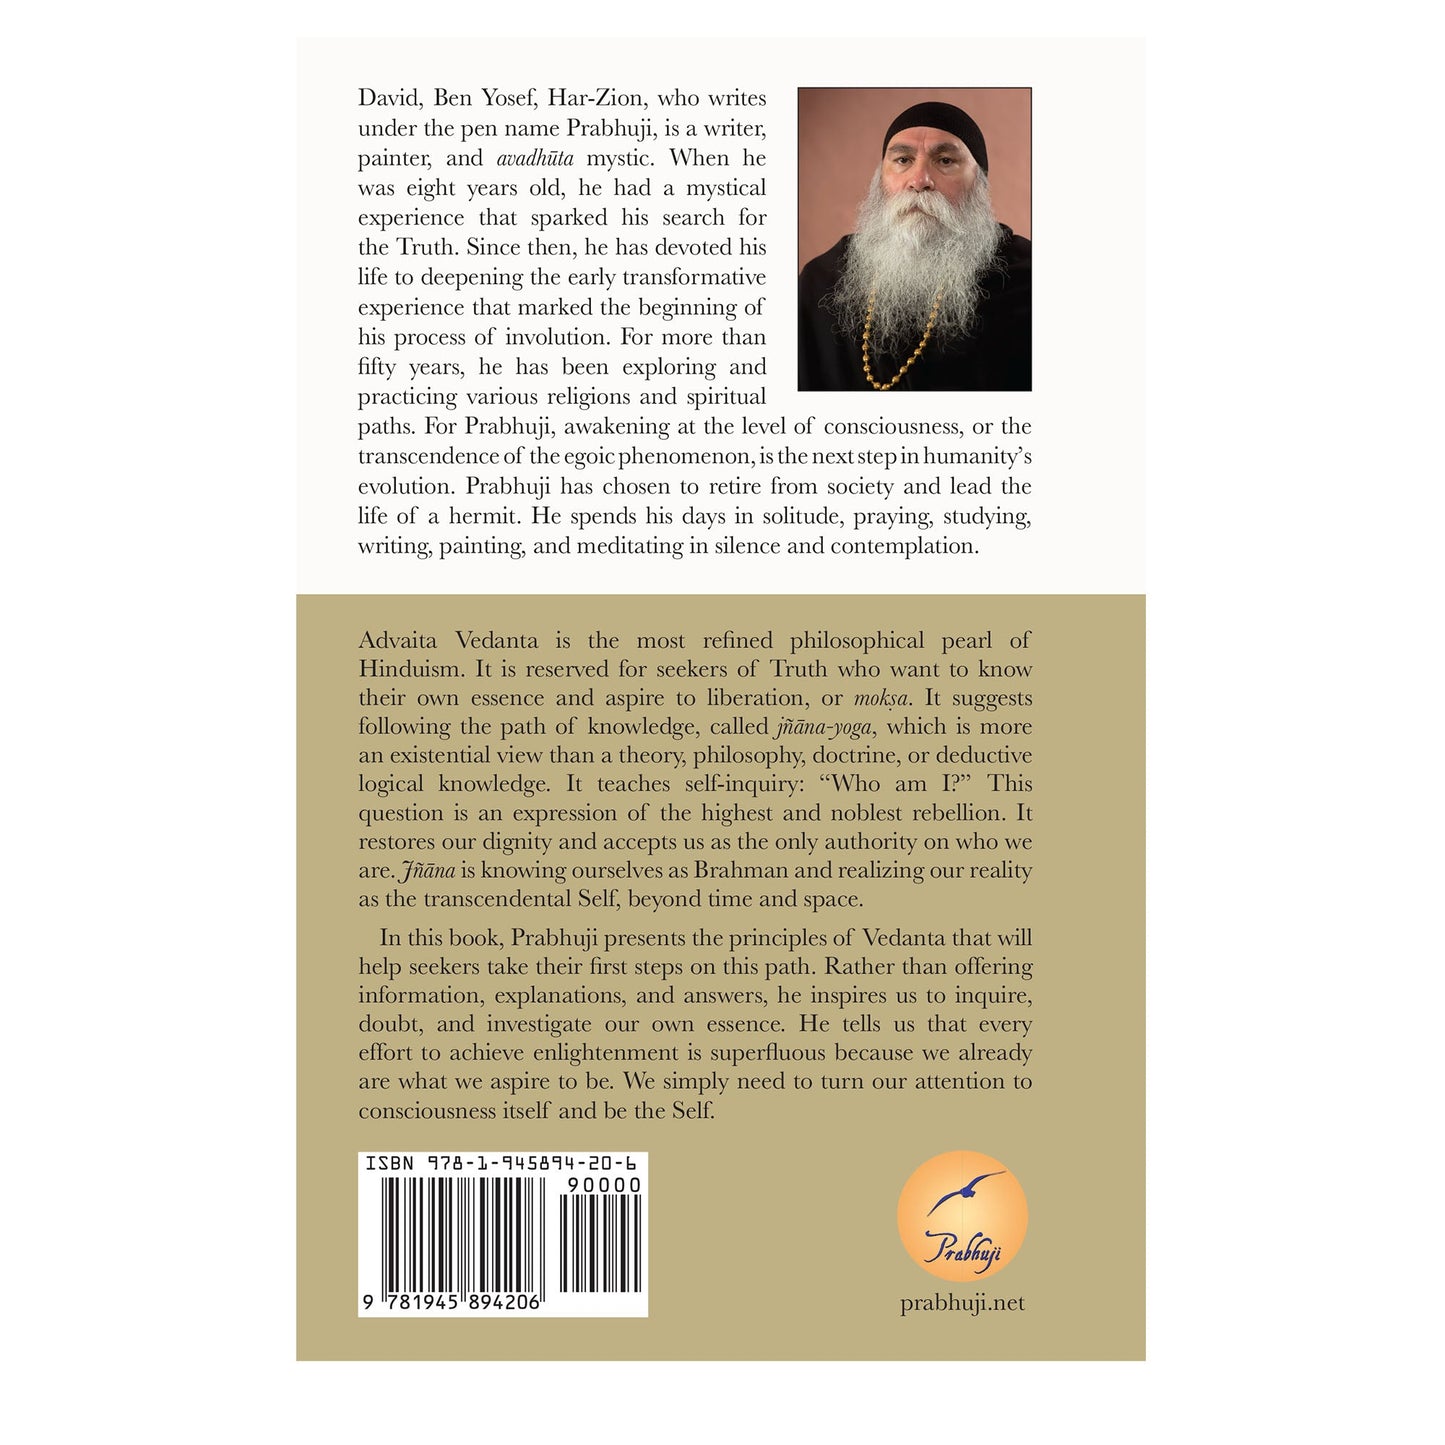 Book Advaita Vedanta - Being the self by Prabhuji (Hard cover - English)